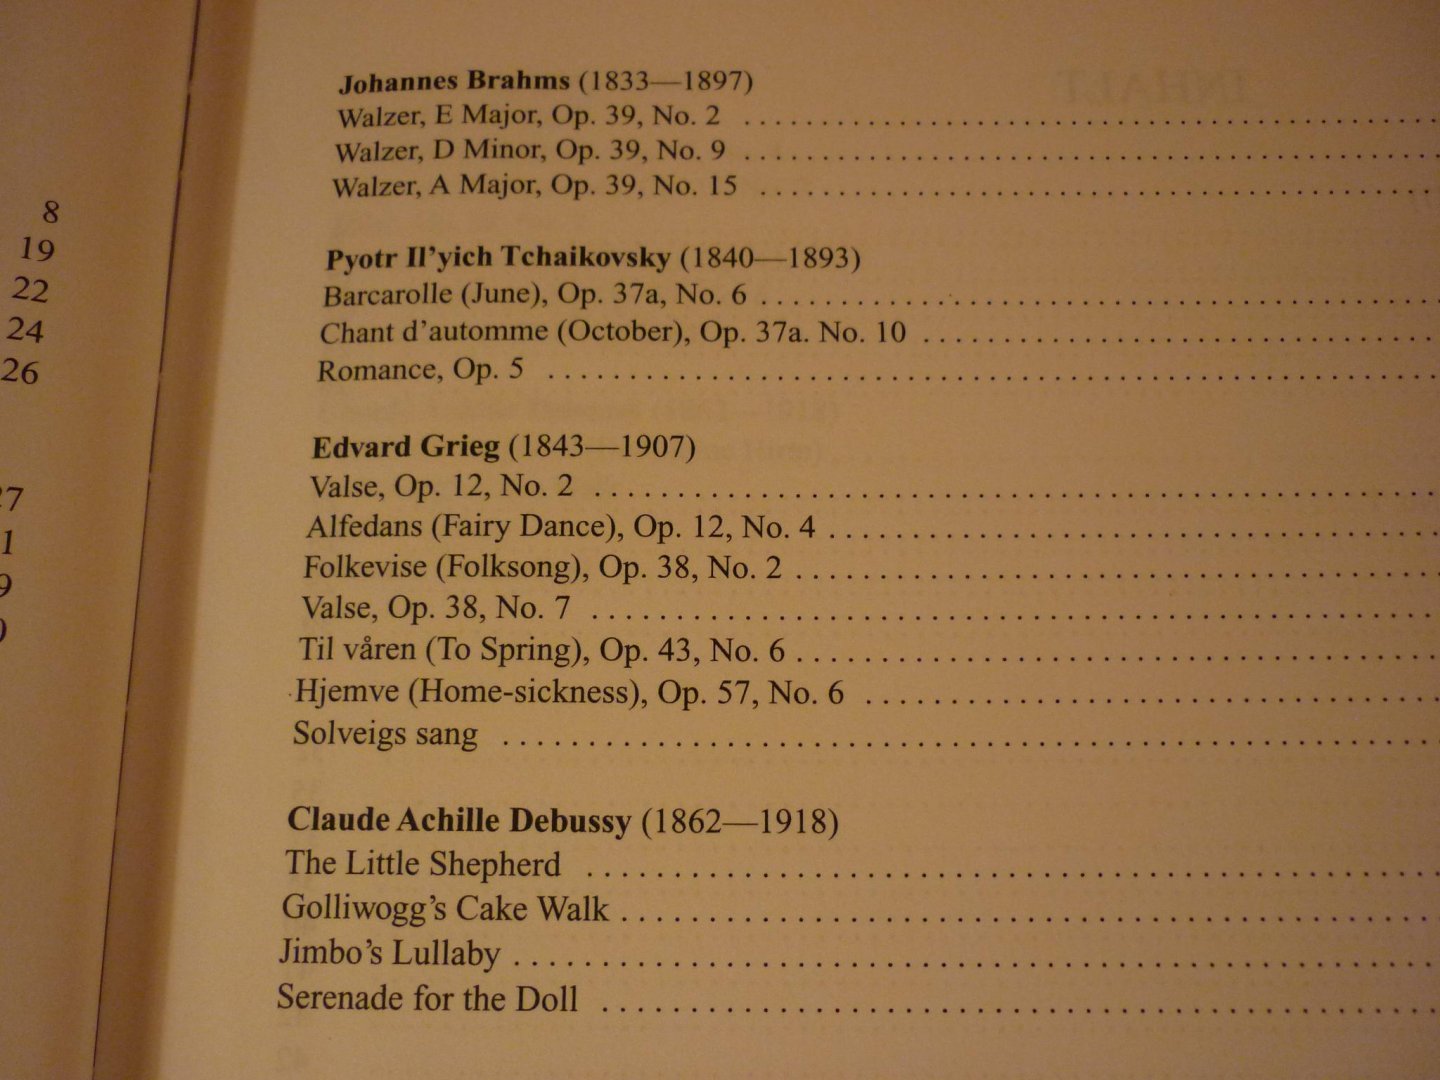 Diverse componisten - Klassiker der Klaviermusik; Heft II - Piano Classics; Volume II (Mendelssohn, Schumann, Chopin, Liszt, Brahms, Debussy...)